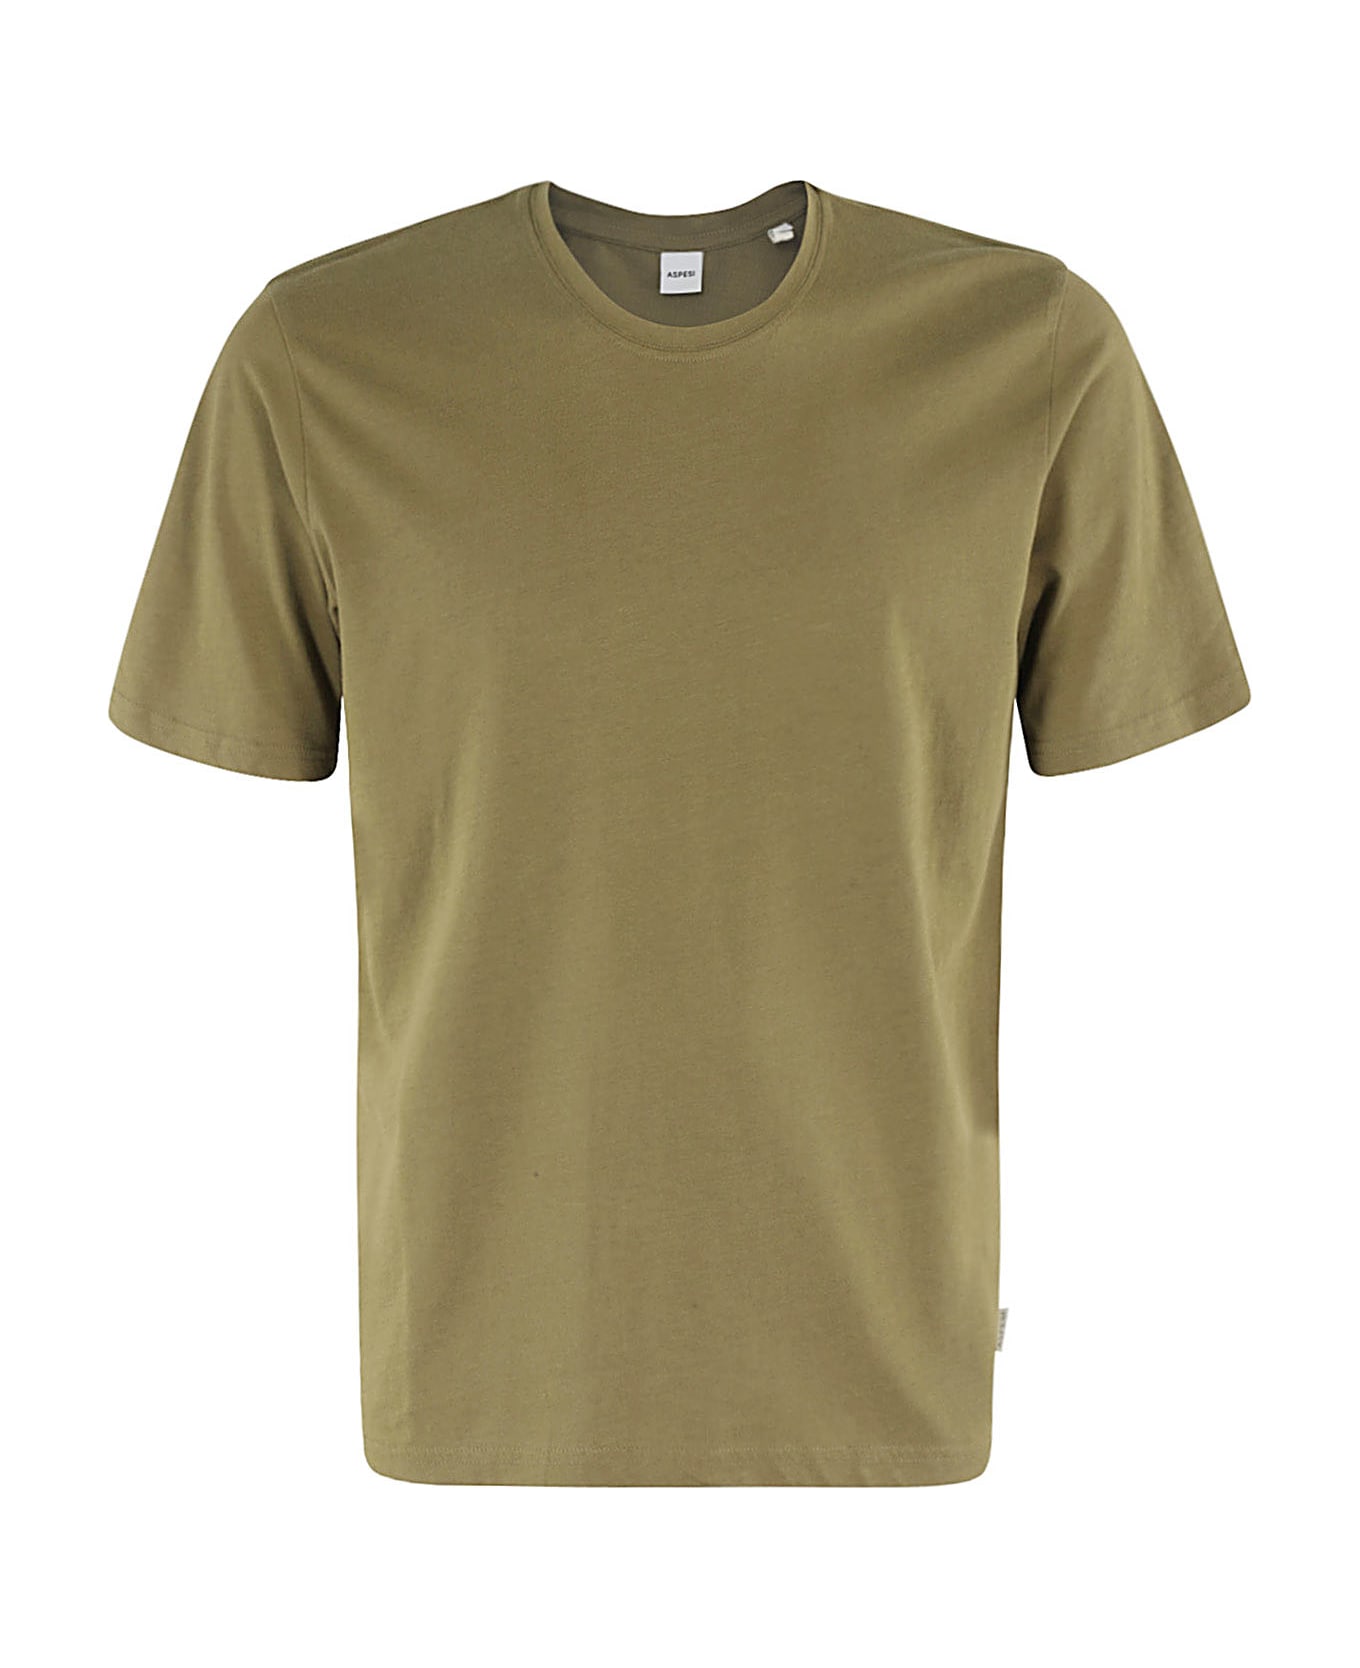 Aspesi T - Shirt Mod 3107 - Militare